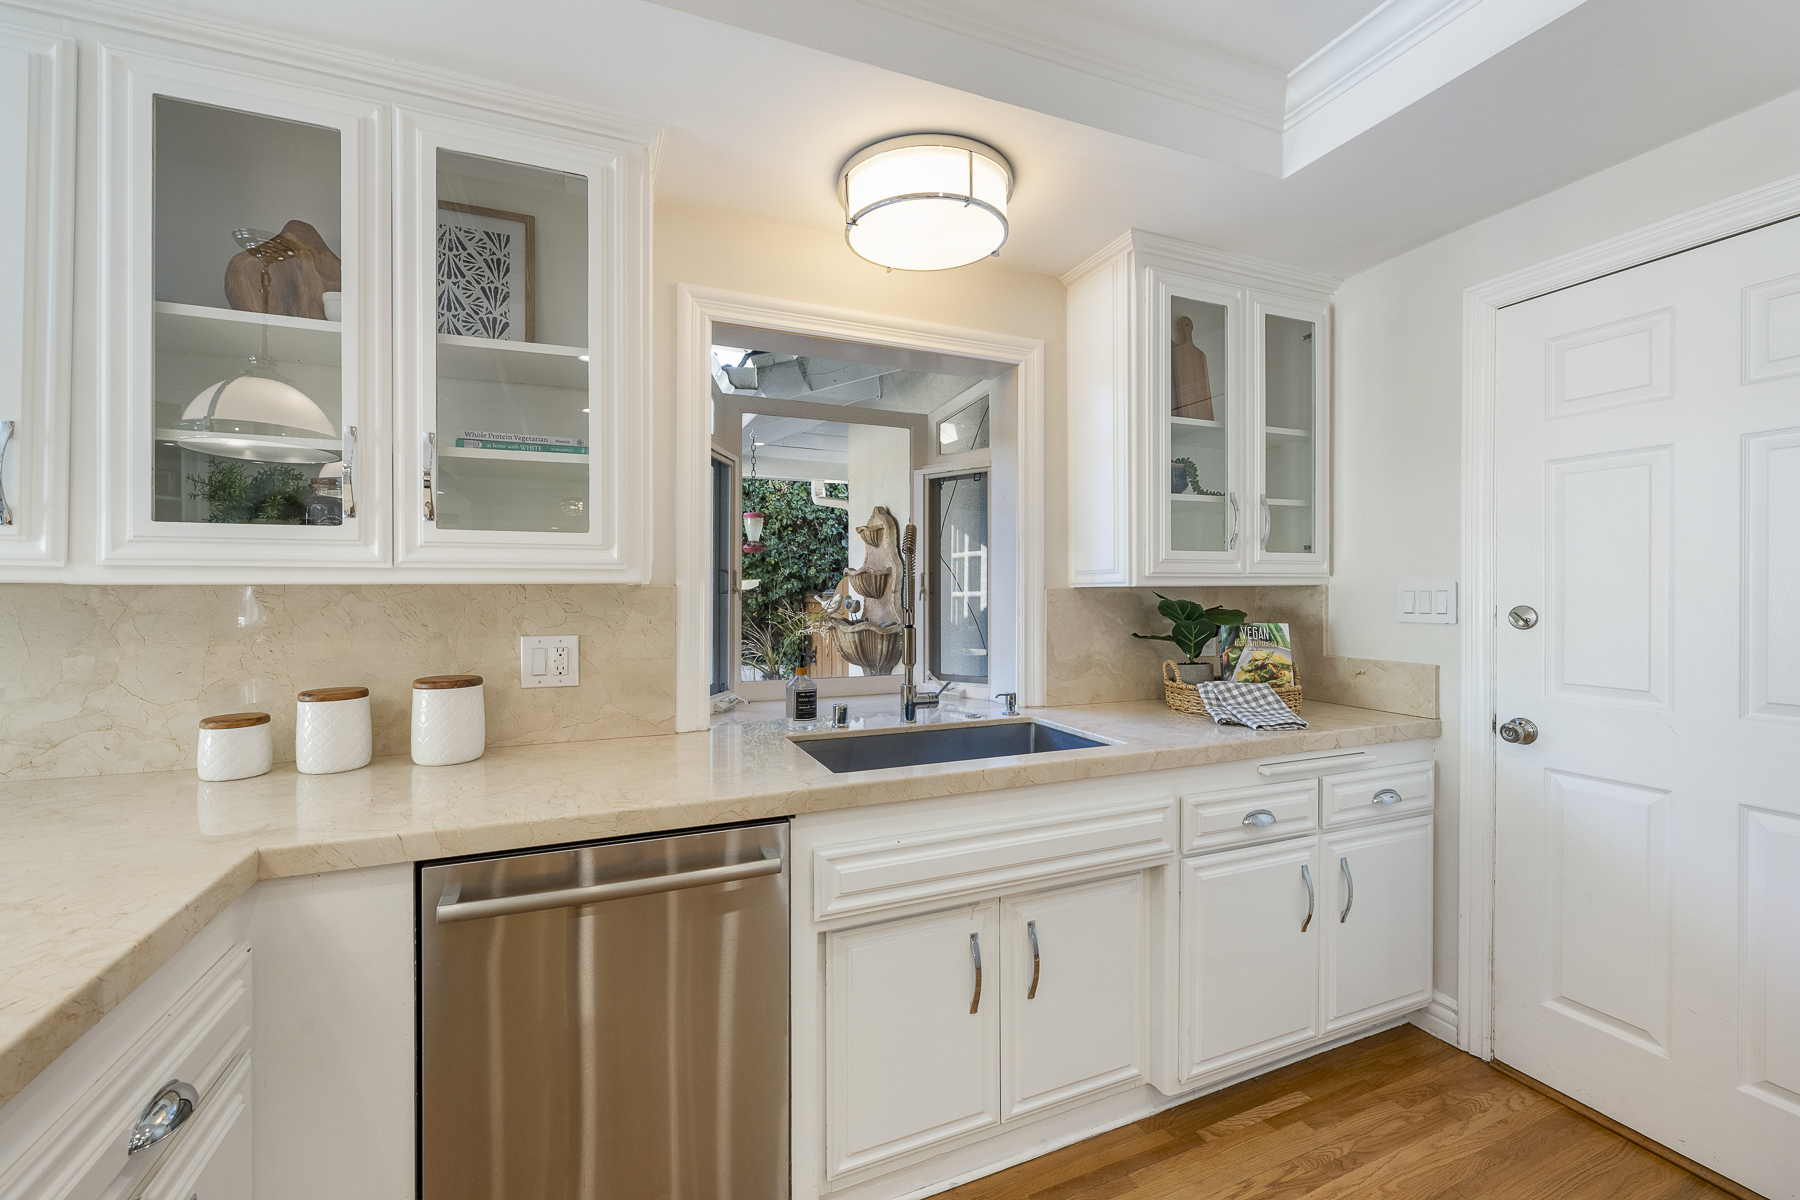 806 N. Adlena Drive, Fullerton, CA 92833: Interior shot of kitchen dishwasher and sink.